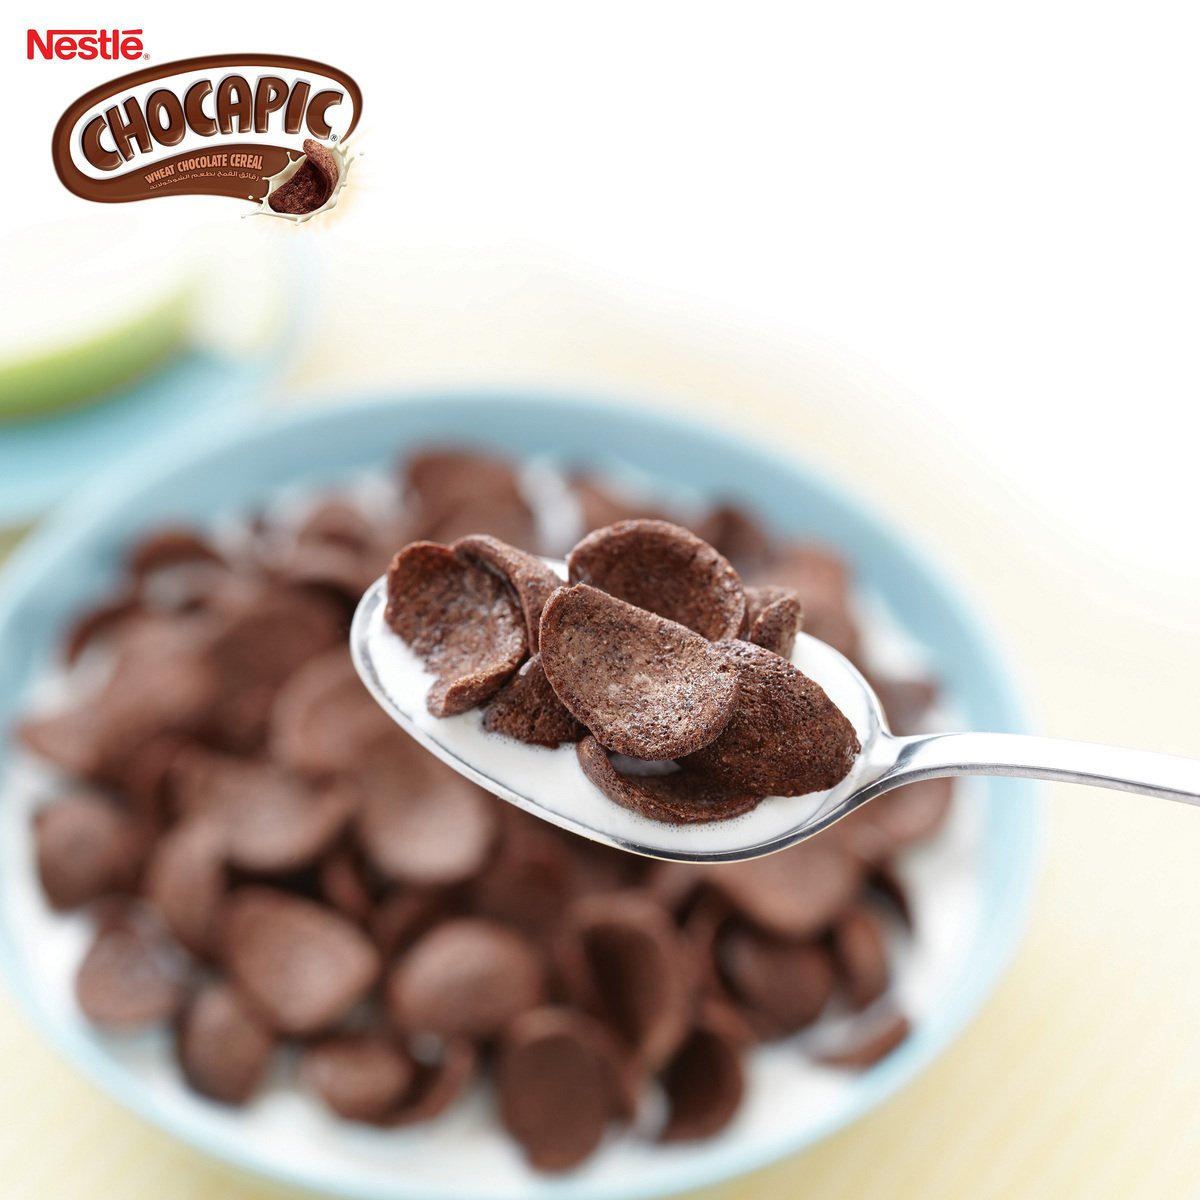 Nestle Chocapic Chocolate Breakfast Cereal 2 x 375g